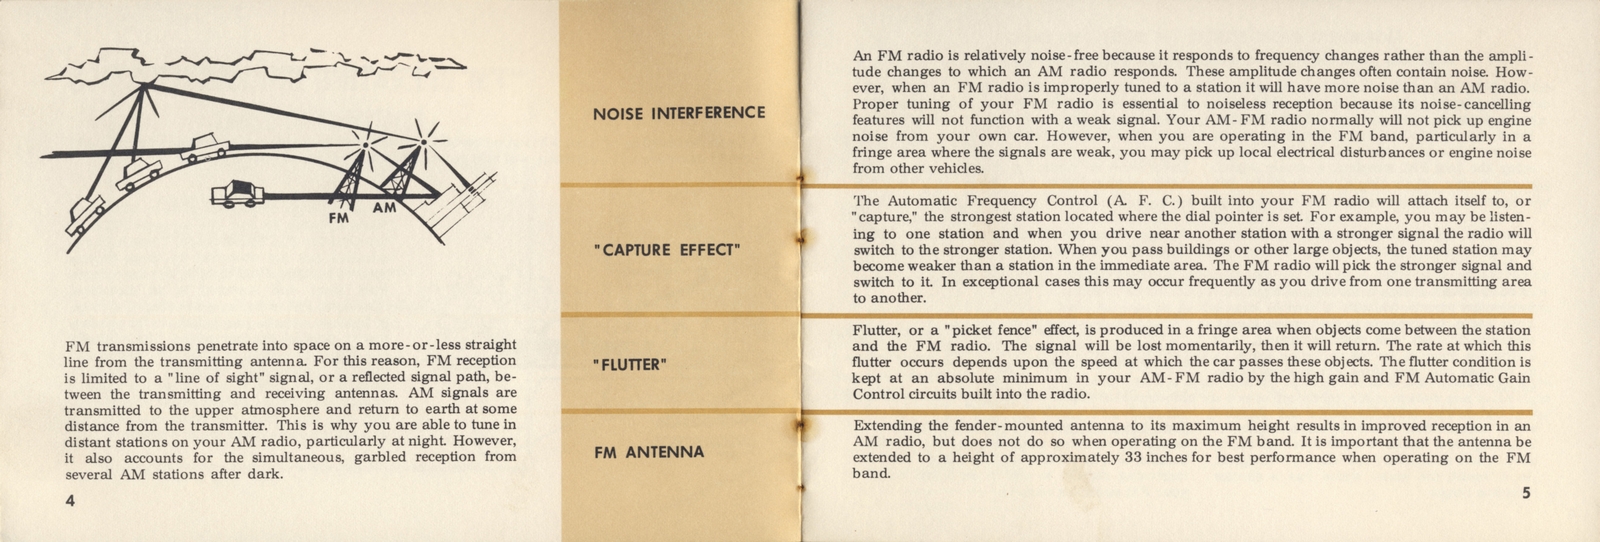 n_1968 Ford Radio Manual-04-05.jpg